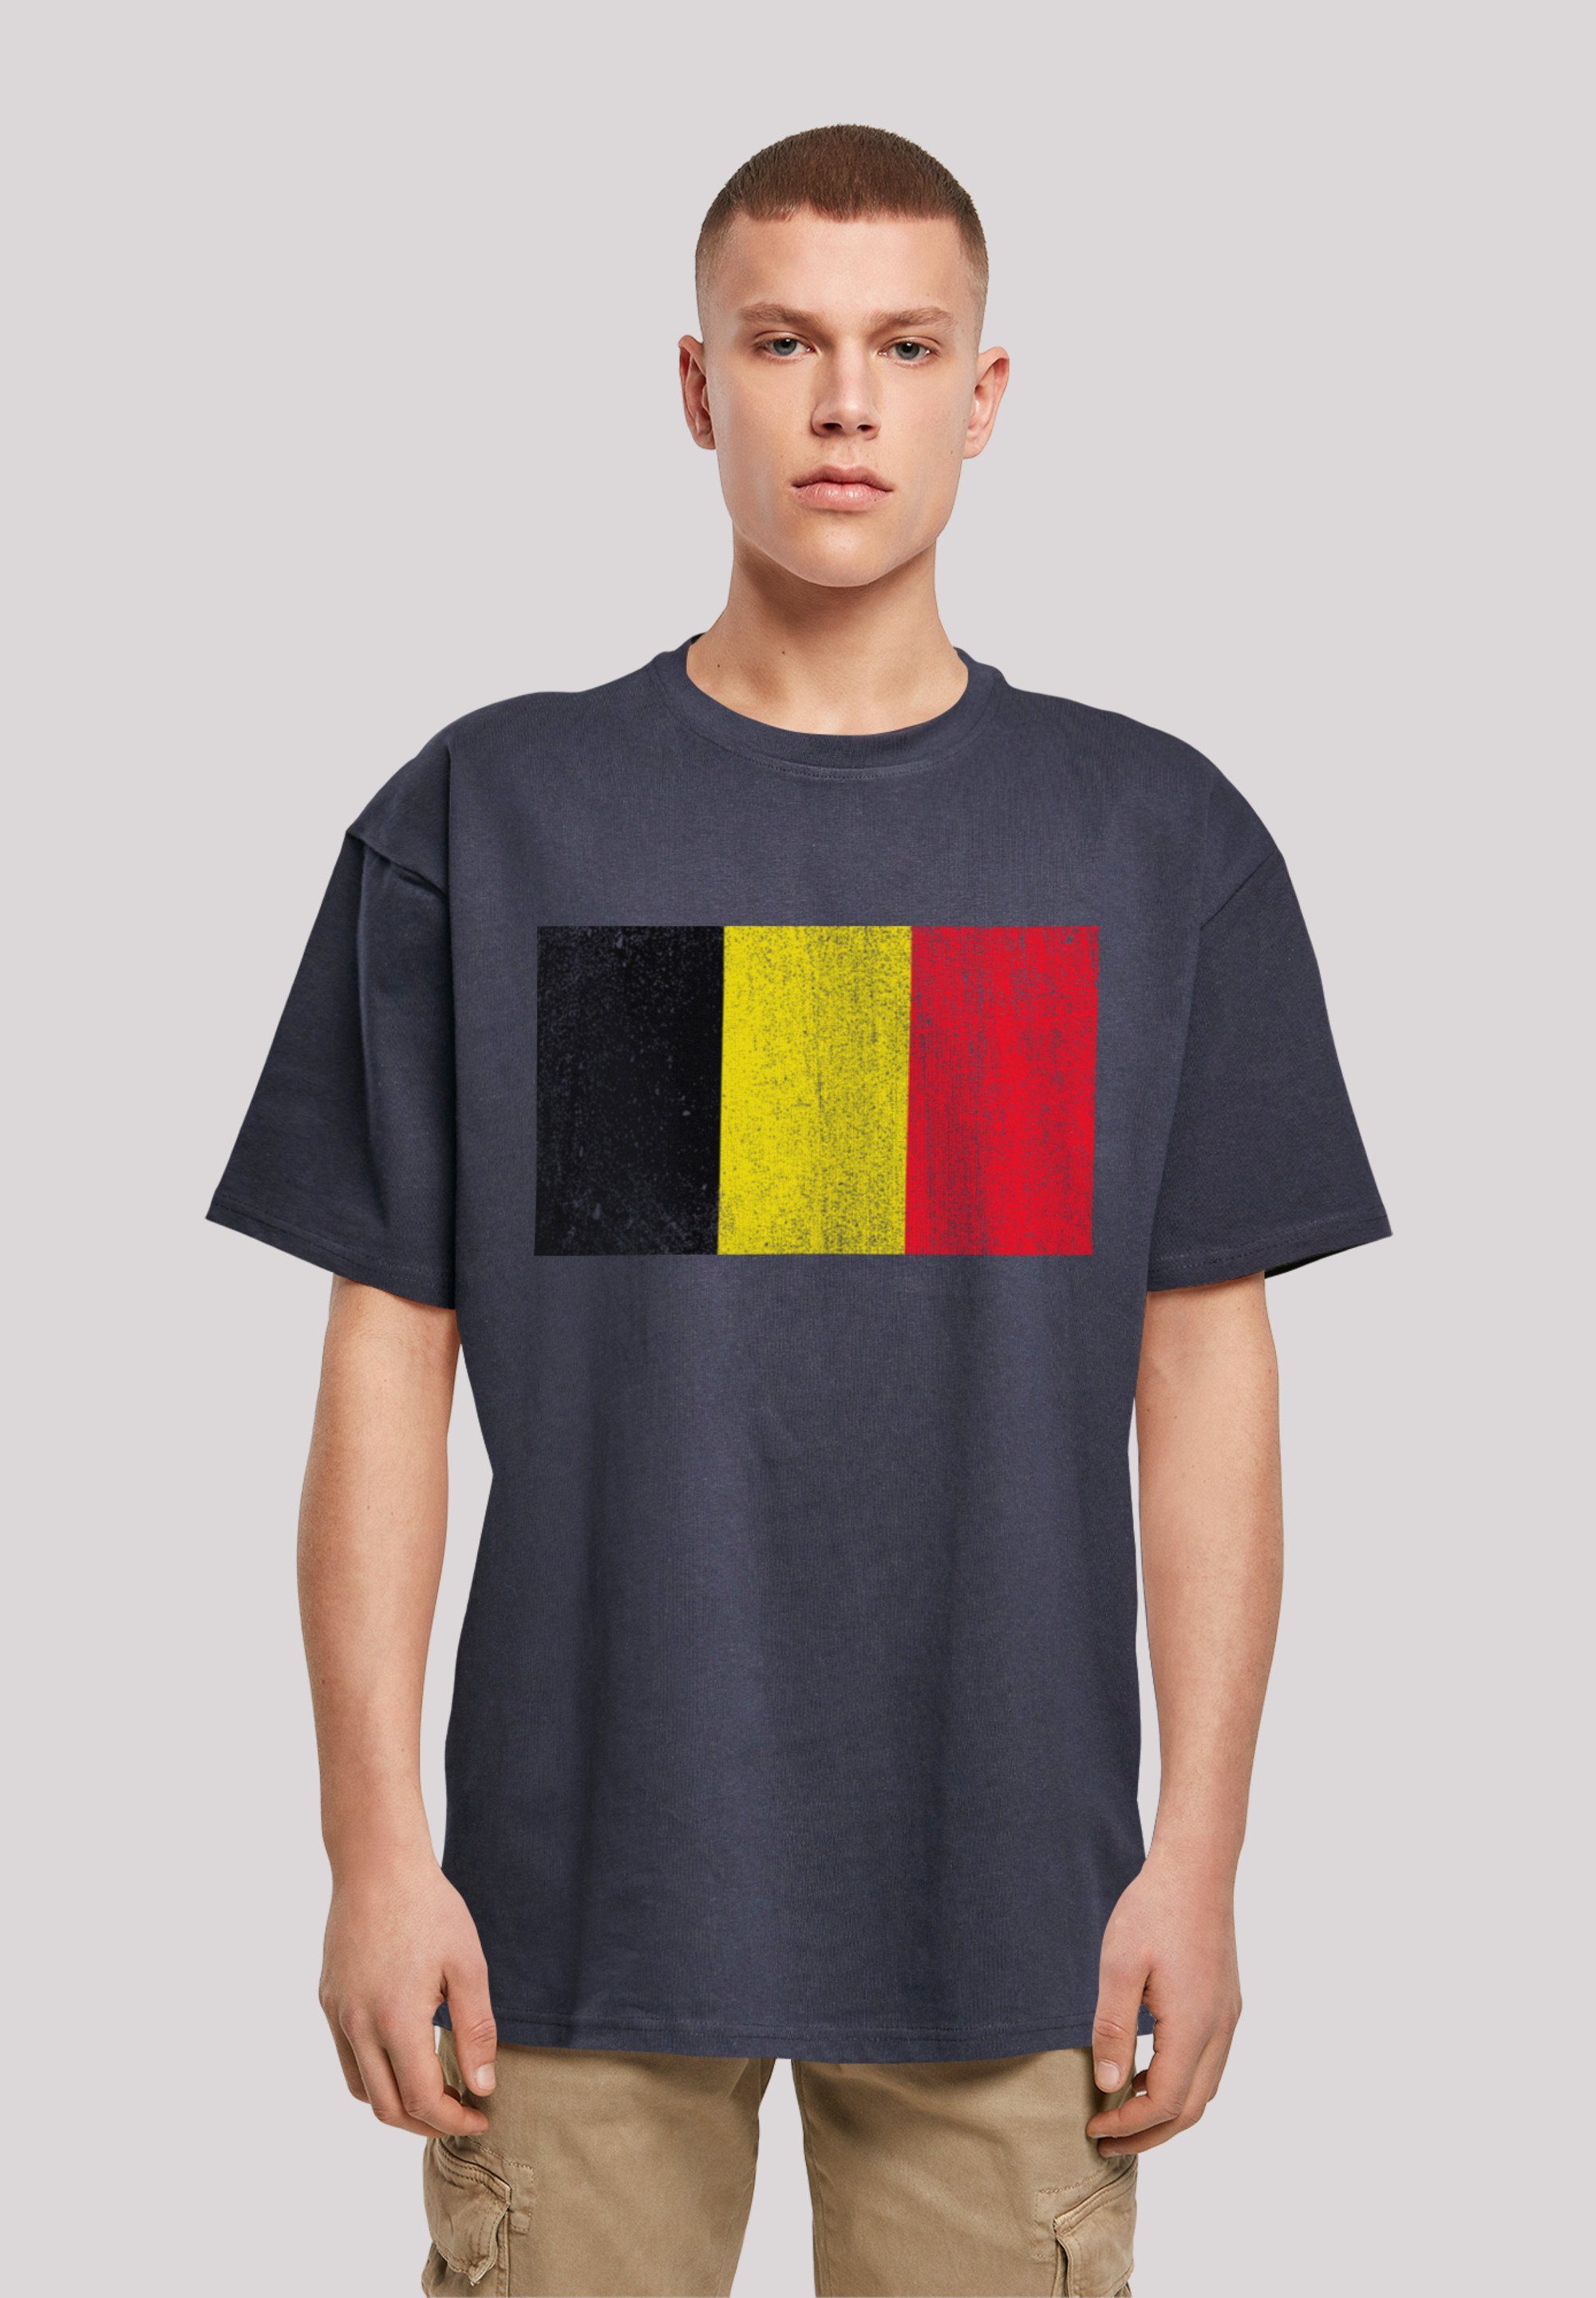 F4NT4STIC T-Shirt Flagge Print Belgium Belgien navy